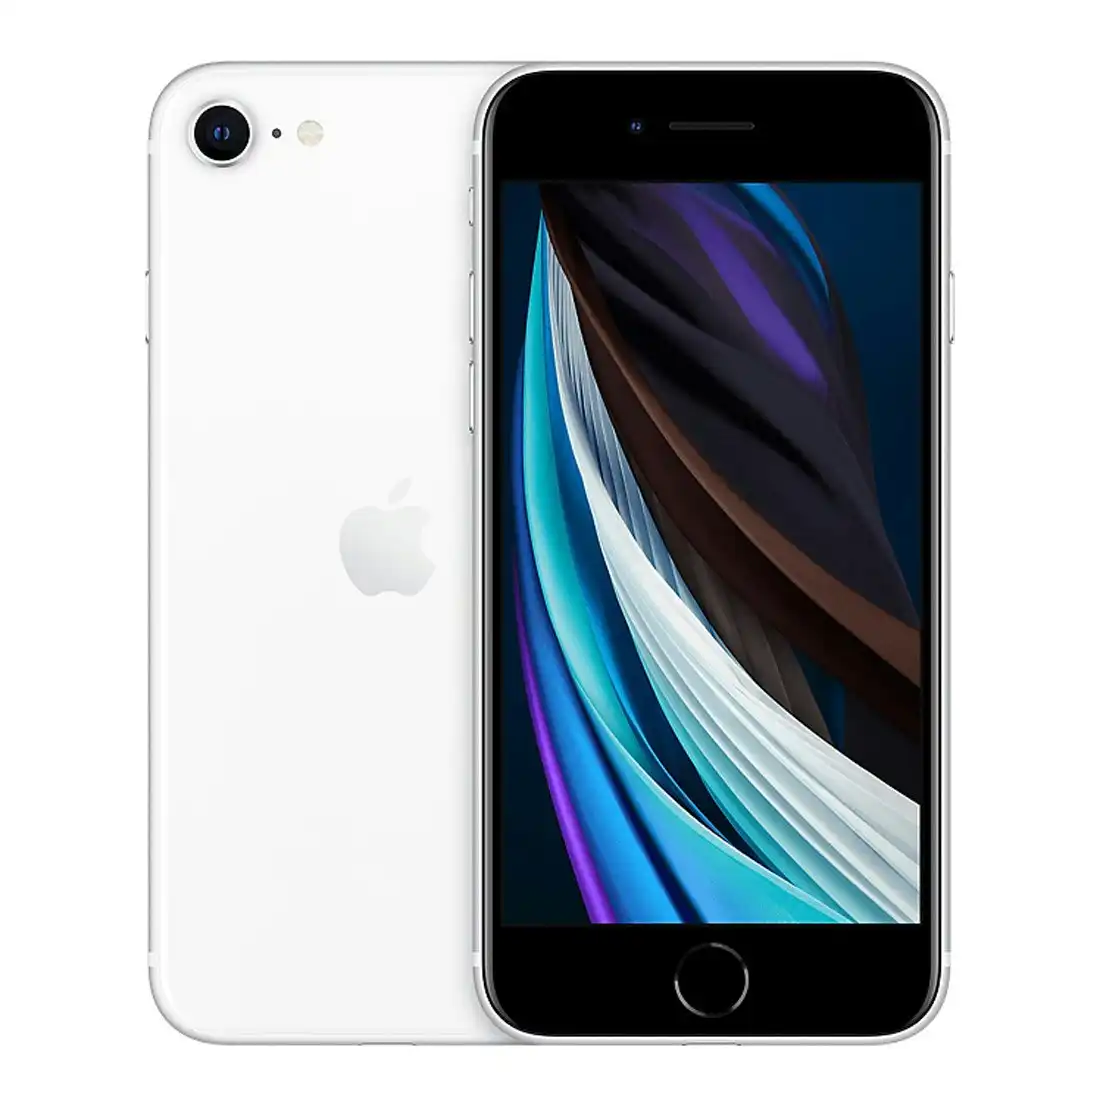 Apple iPhone SE (2nd Gen) 64GB White [Refurbished] - Excellent